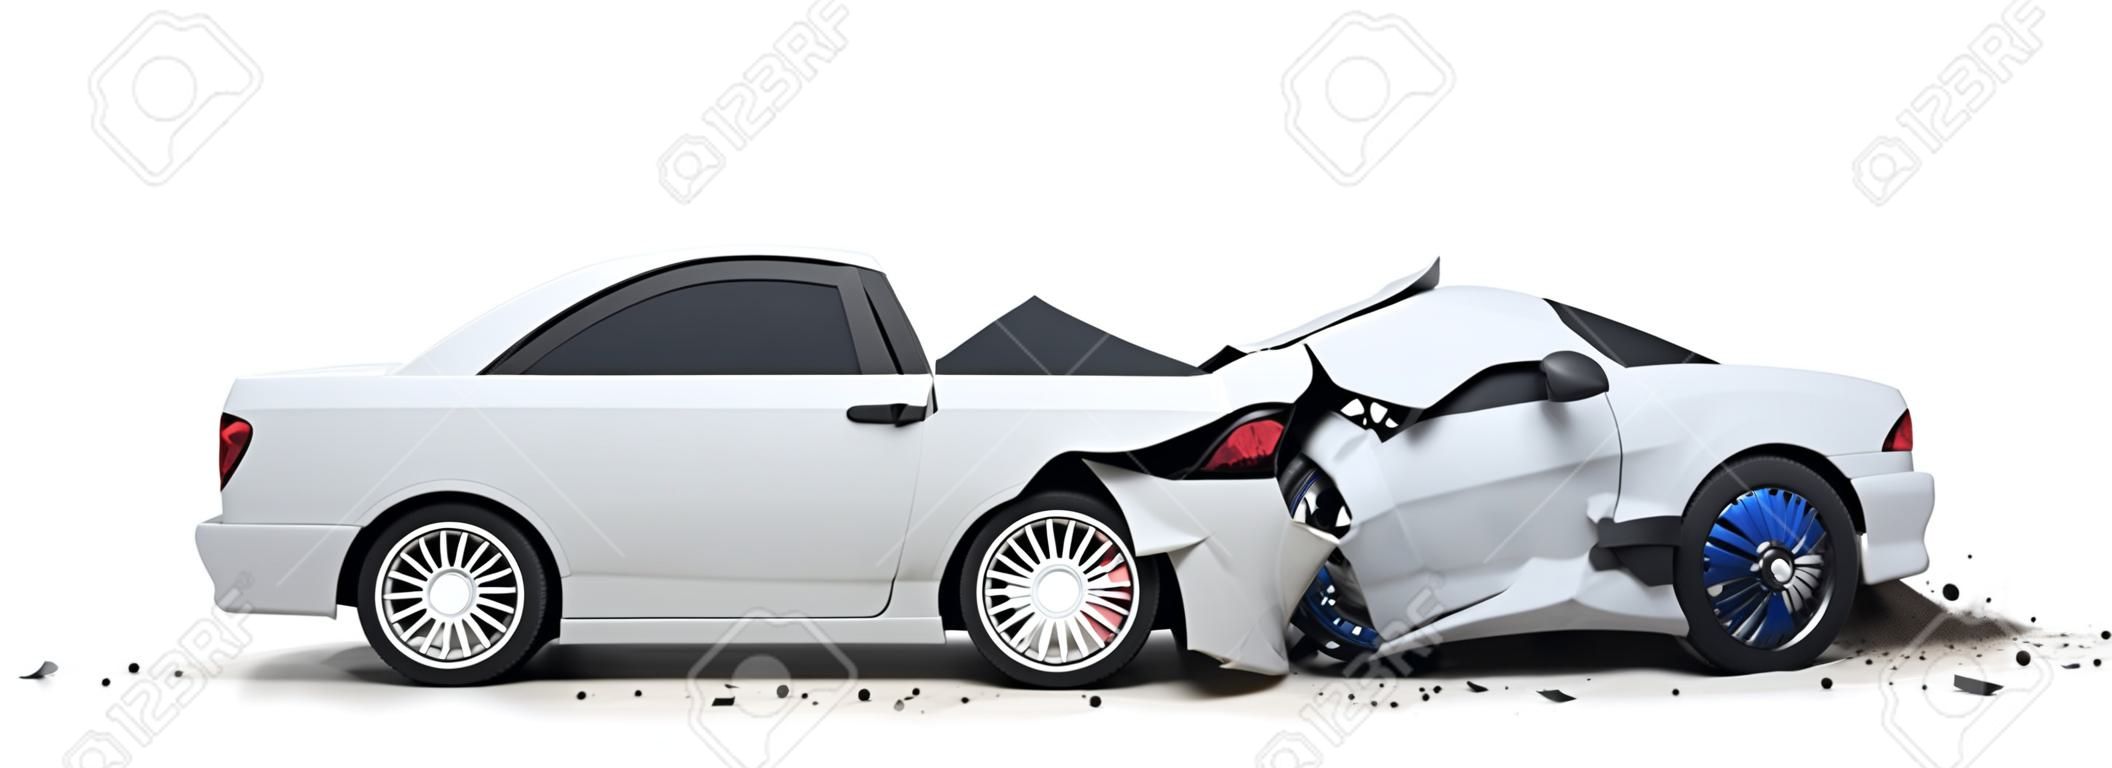 Two car crash on white background. 3d illustration